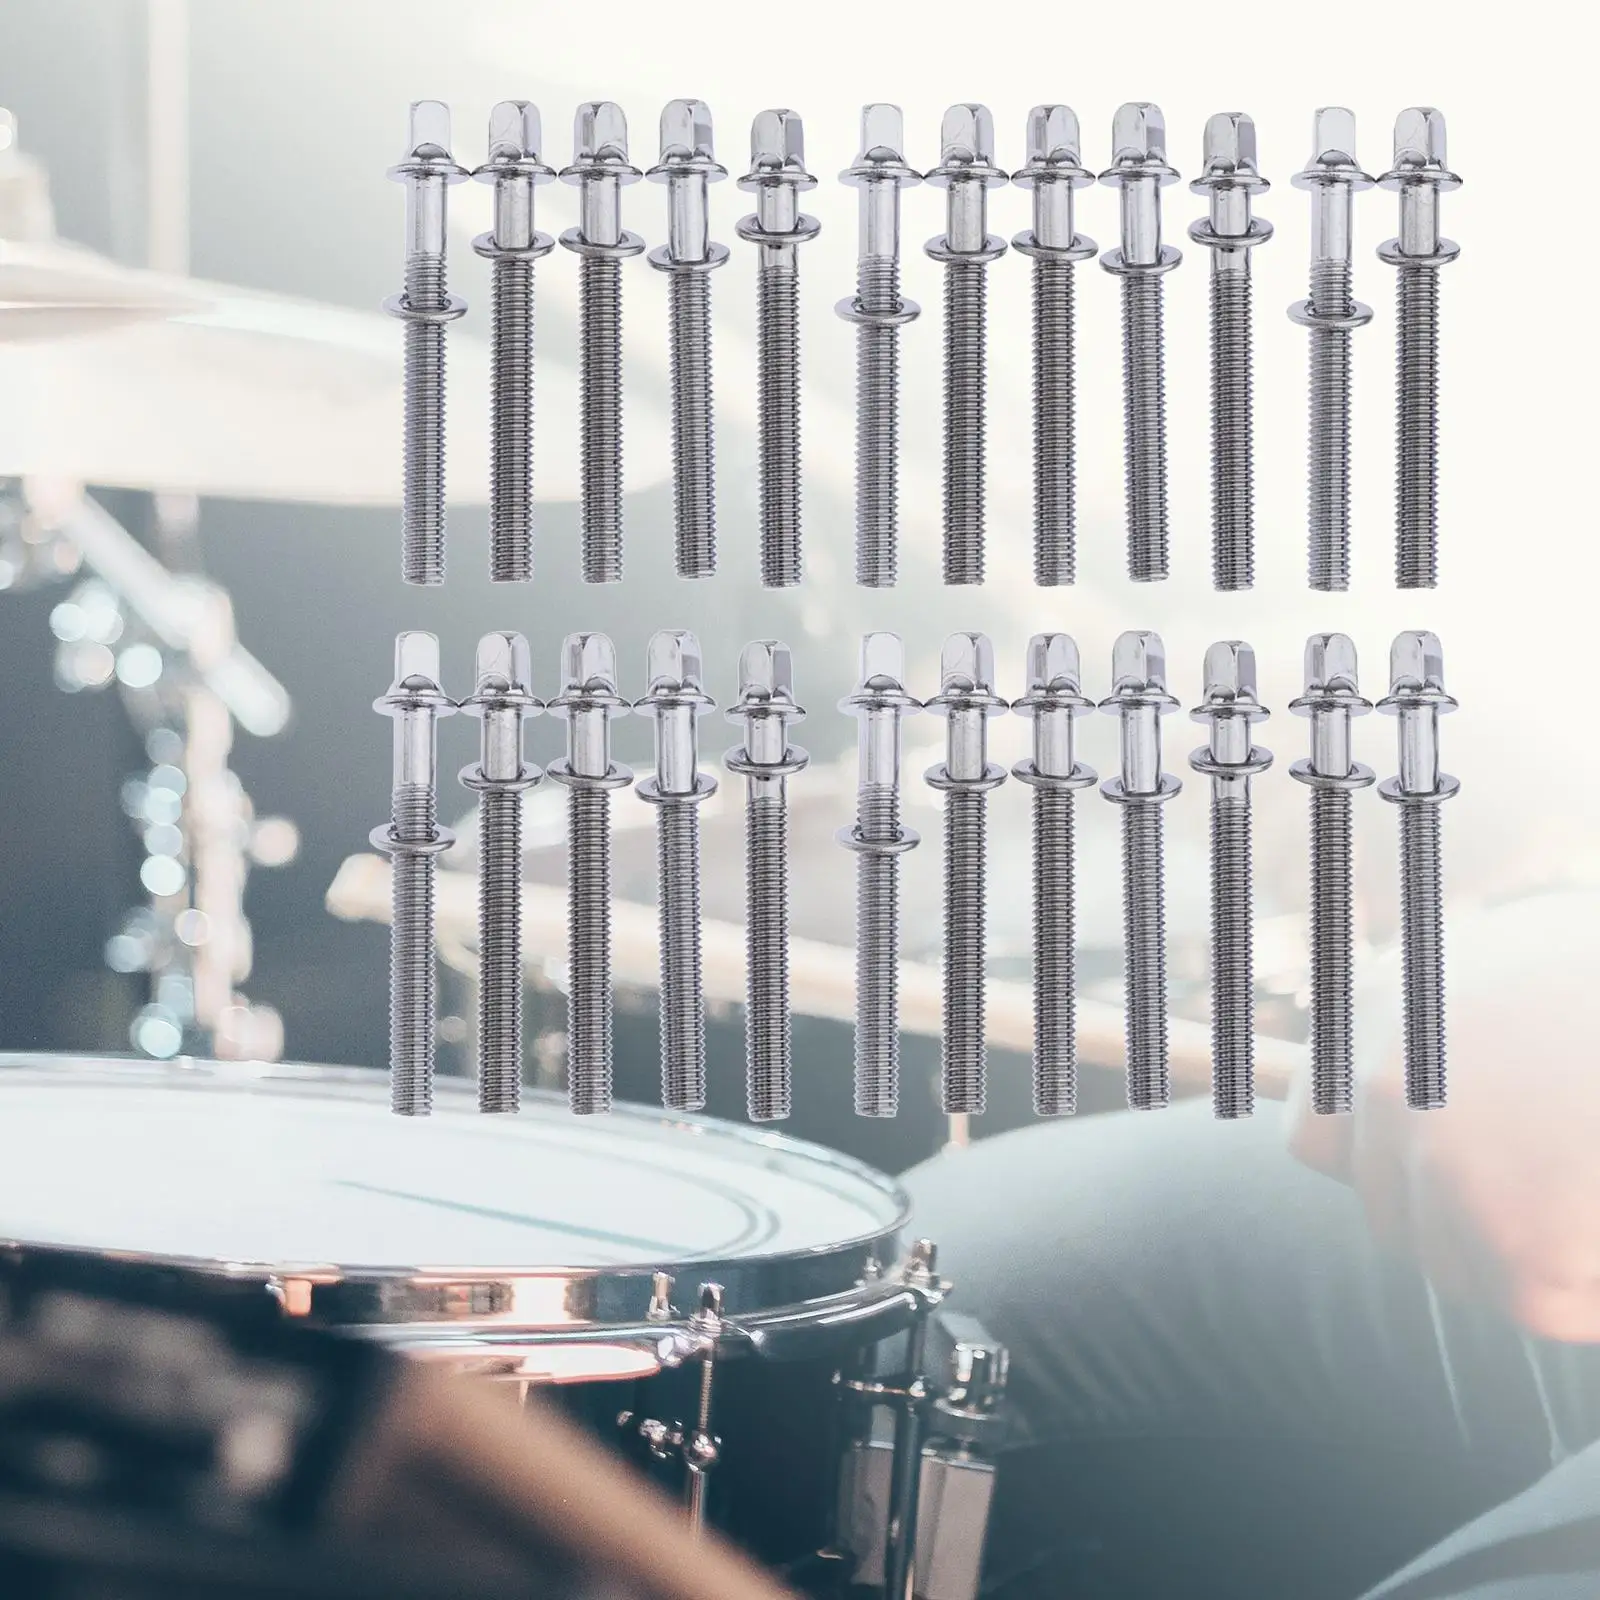 24x Drum Screws Tension Rods Short Screws Musical Instrument Accessory Iron Drum Tight Screw Drum Hardware Parts Accessory